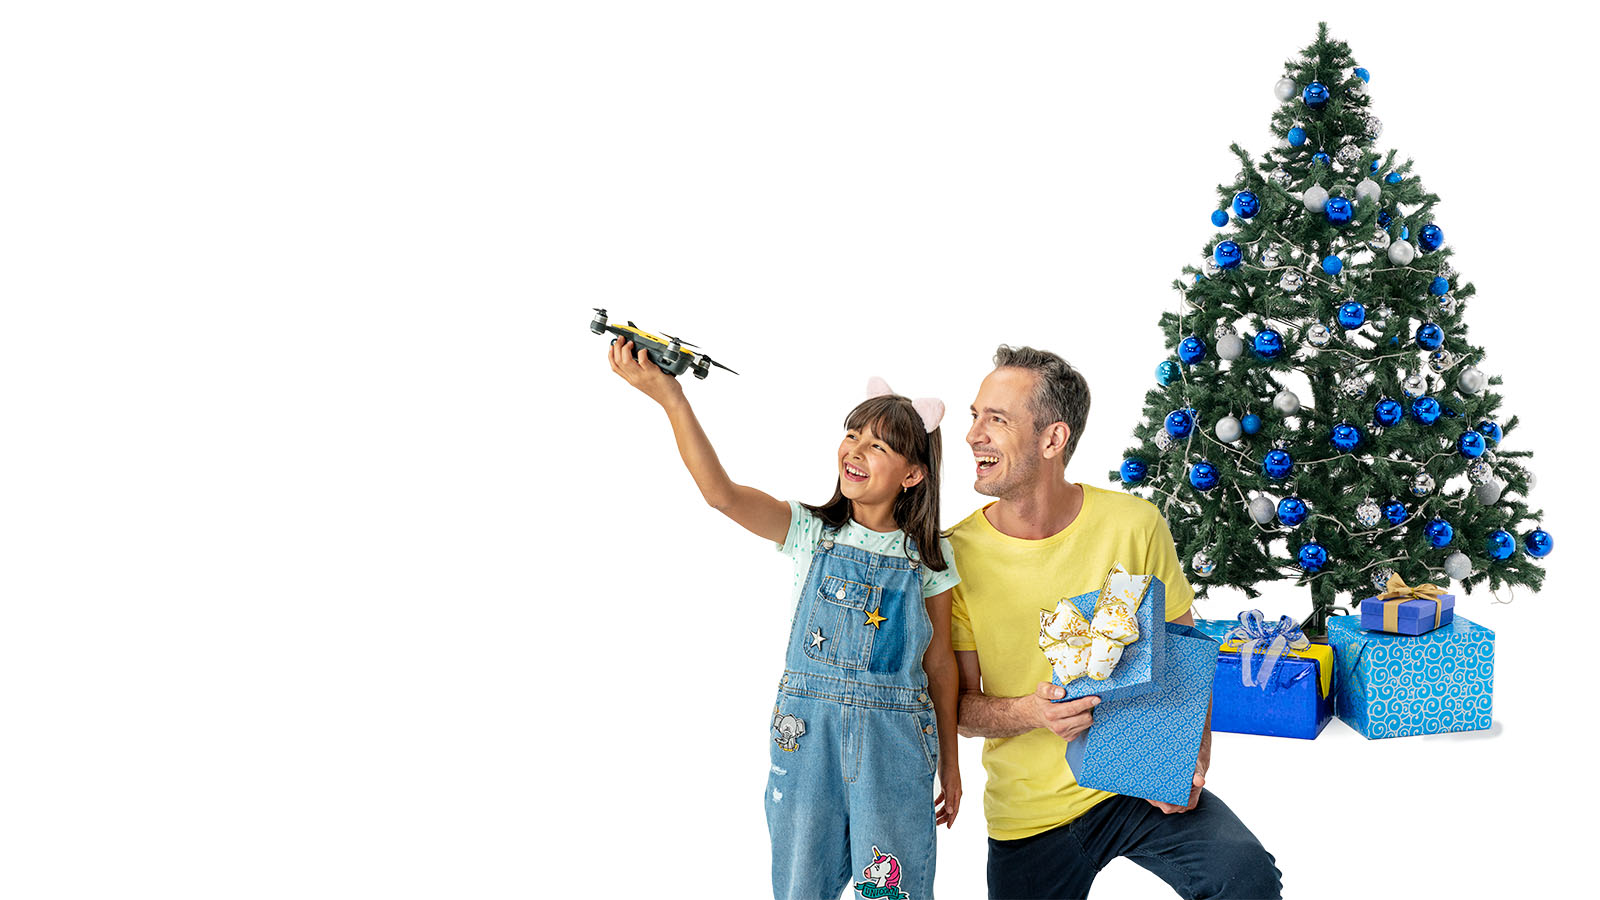 Padre e hija junto a un árbol de navidad